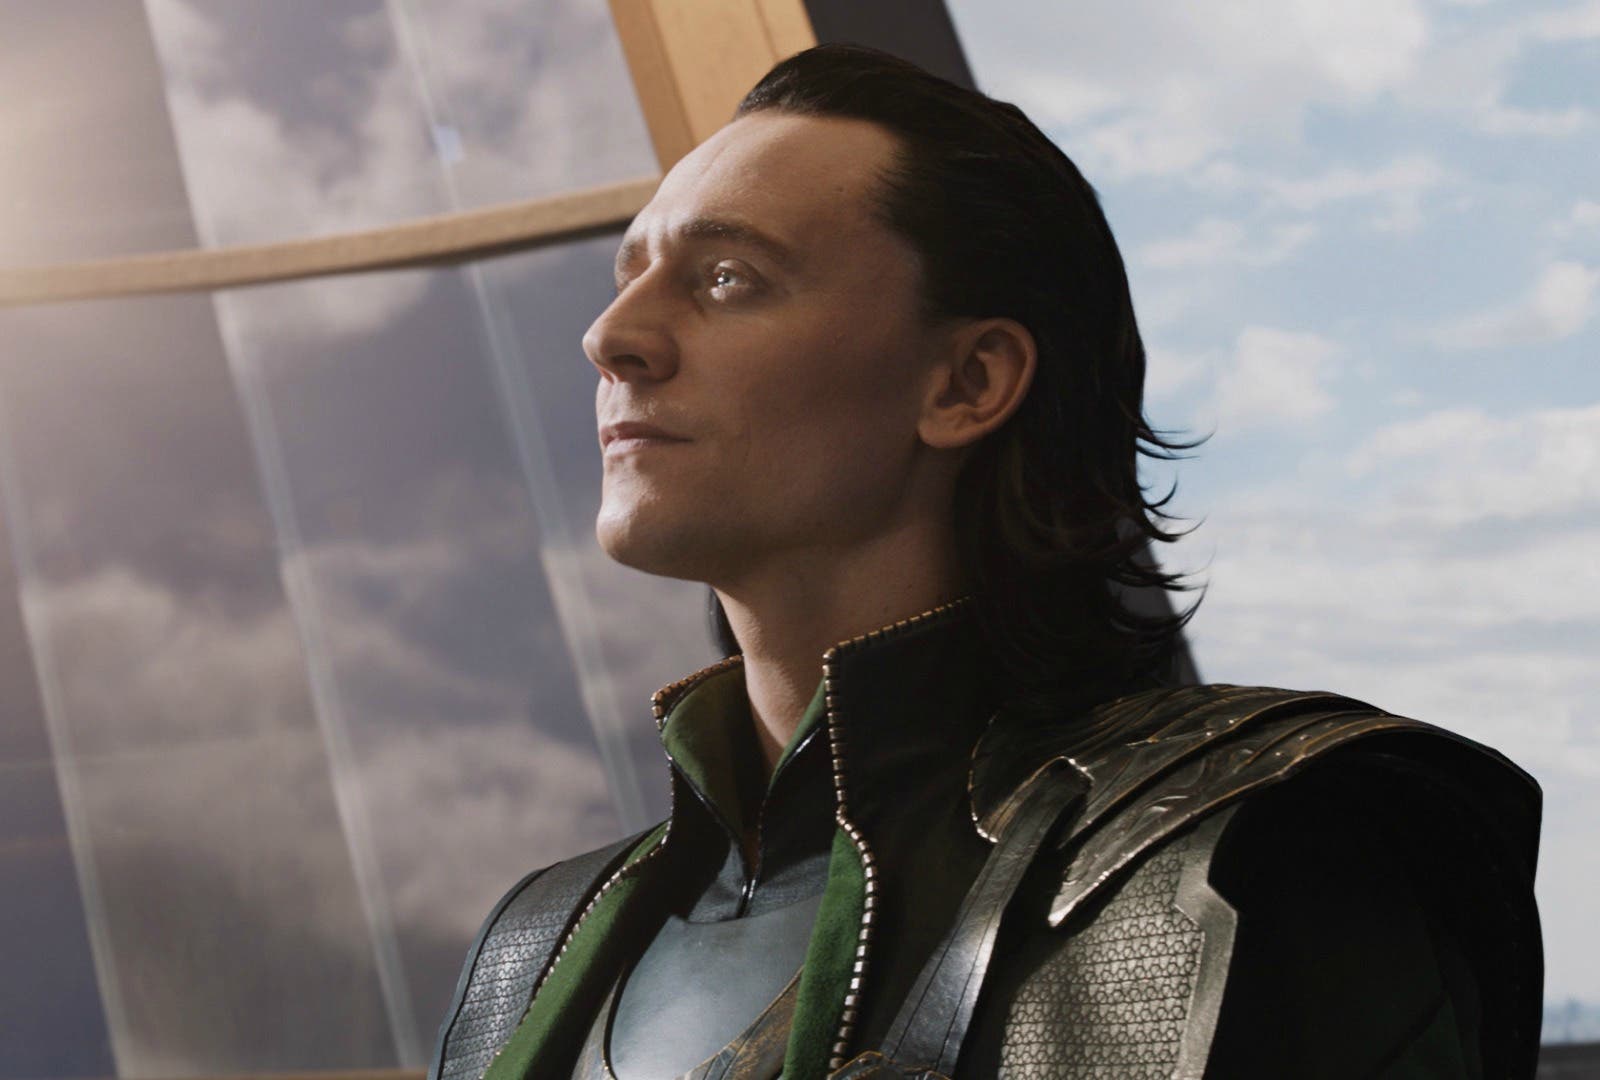 Tom Hiddleston
Loki
bisexual
LGBTIQ+